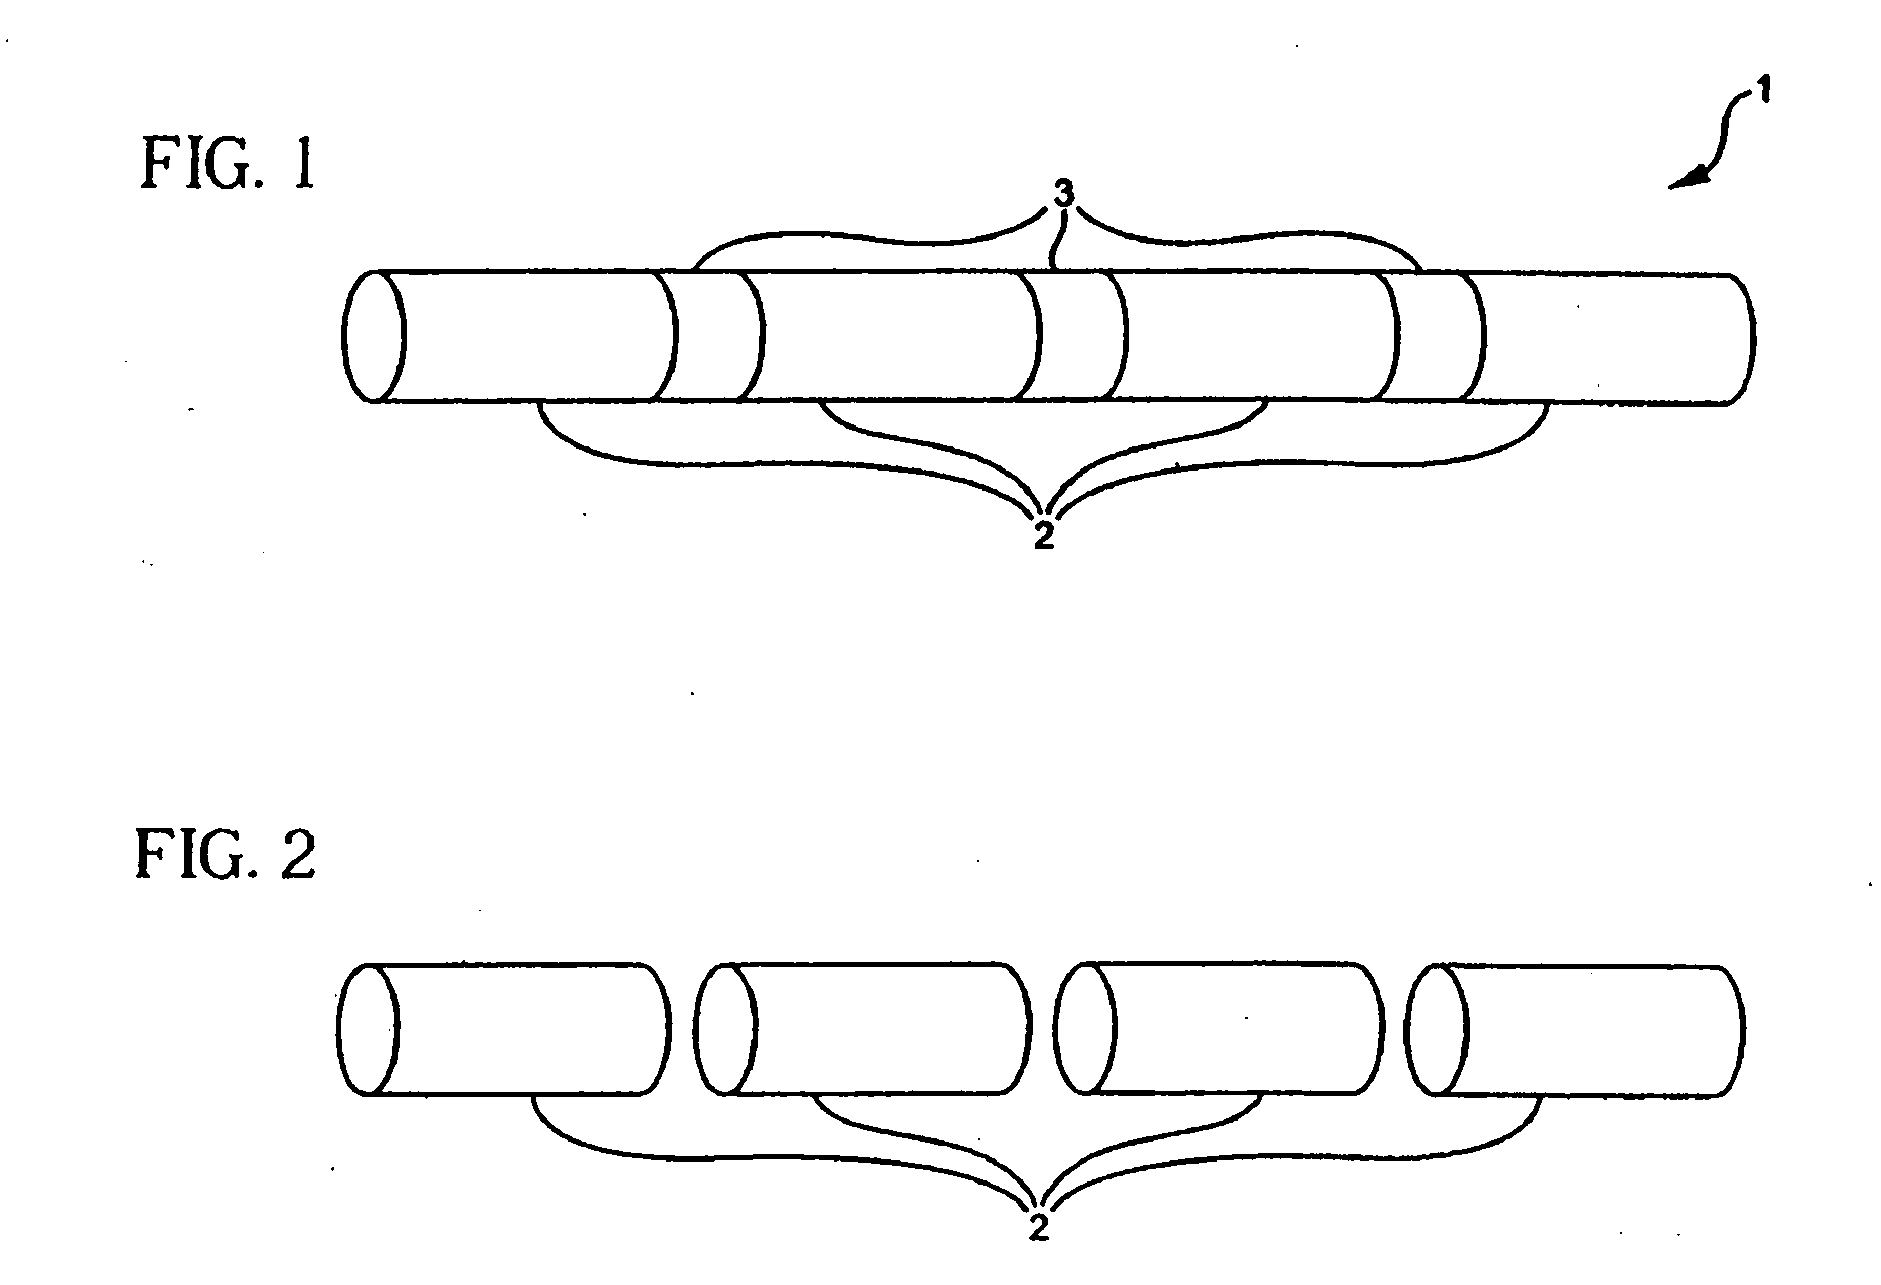 Hybrid stent having a fiber or wire backbone